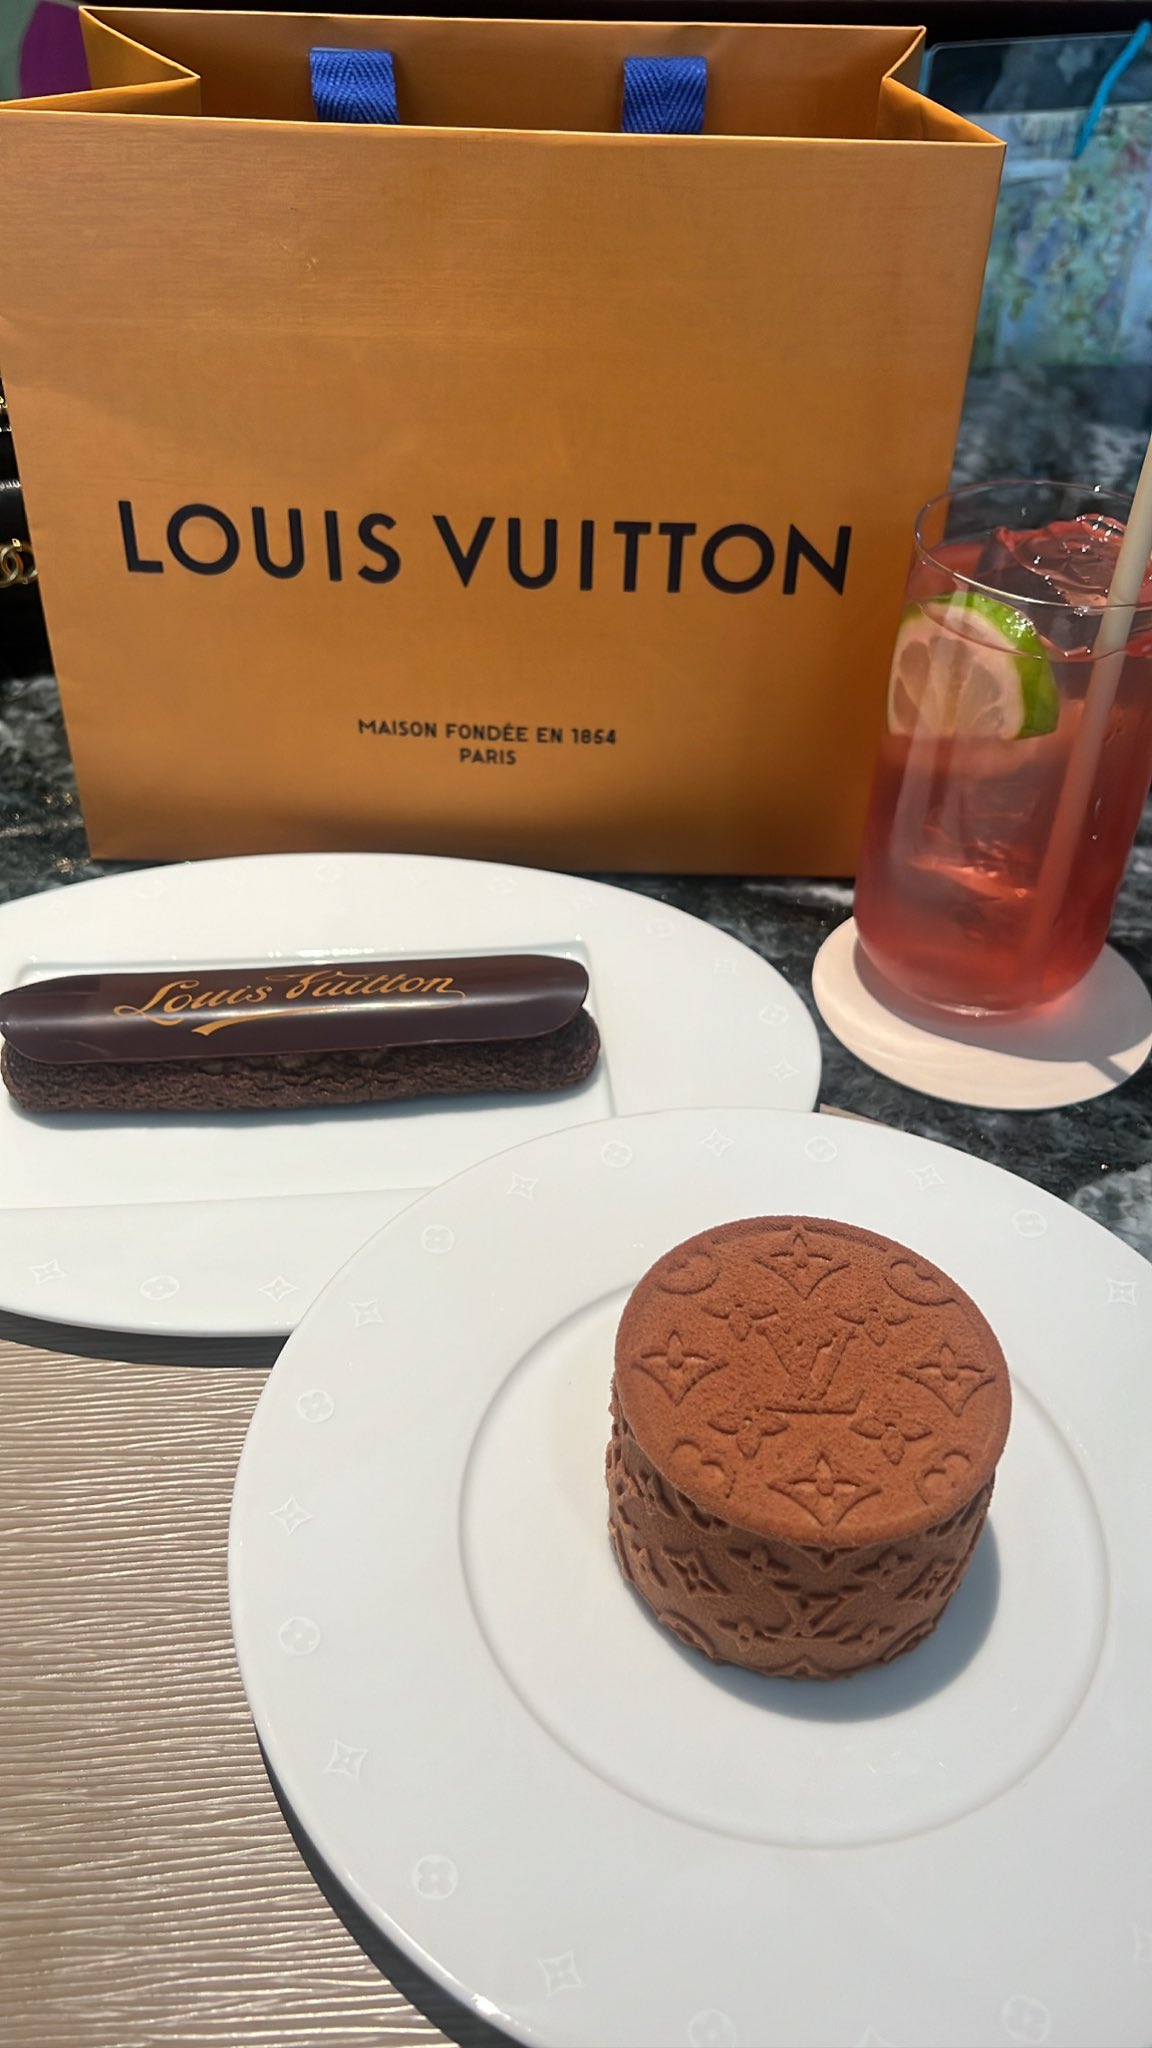 LV pastry : r/Louisvuitton